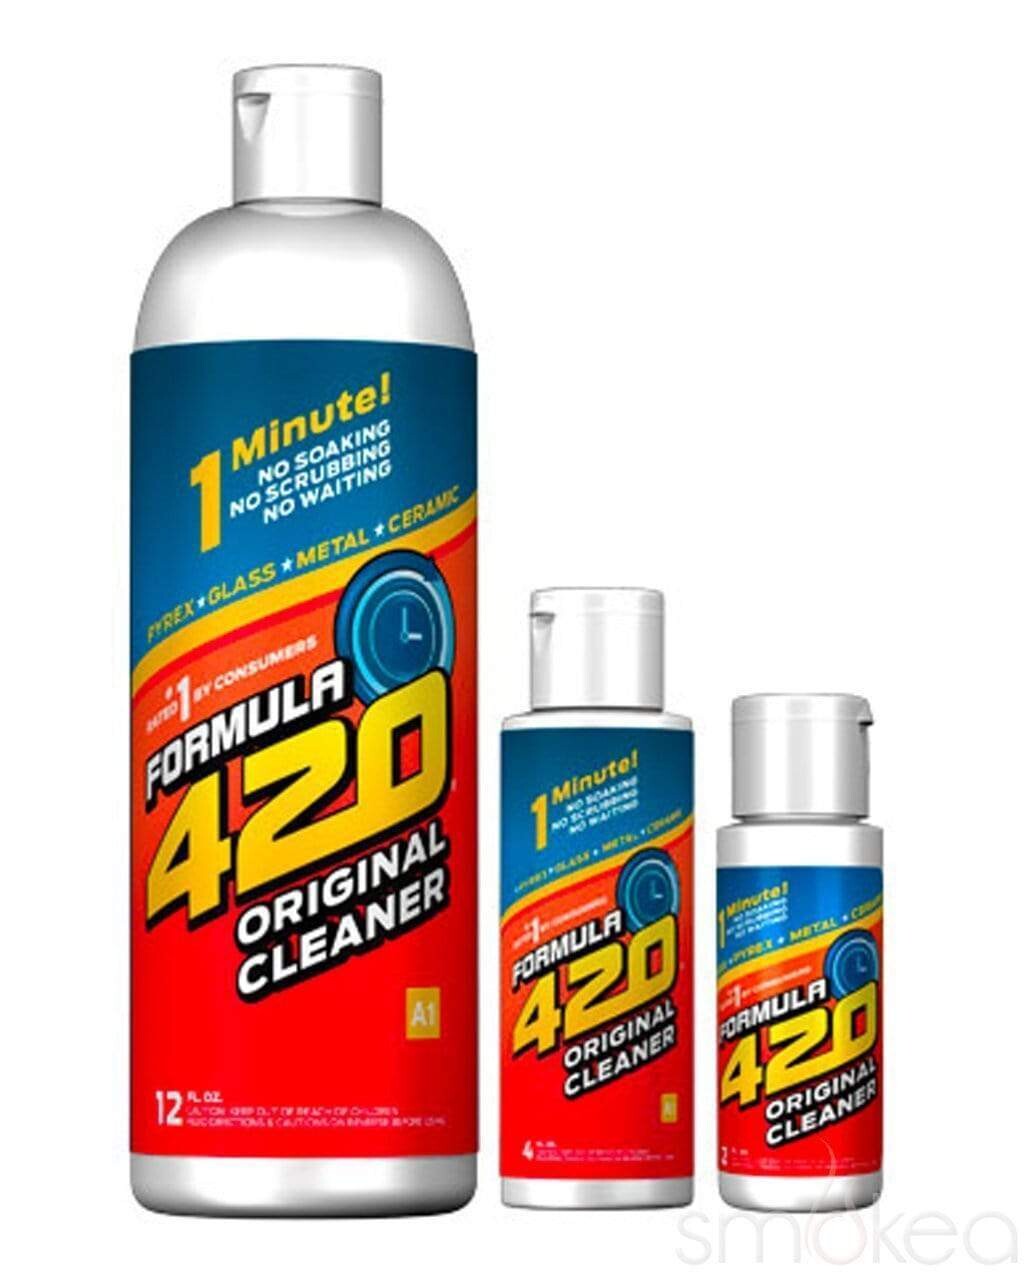 Formula 420 Original- 12oz cleaner